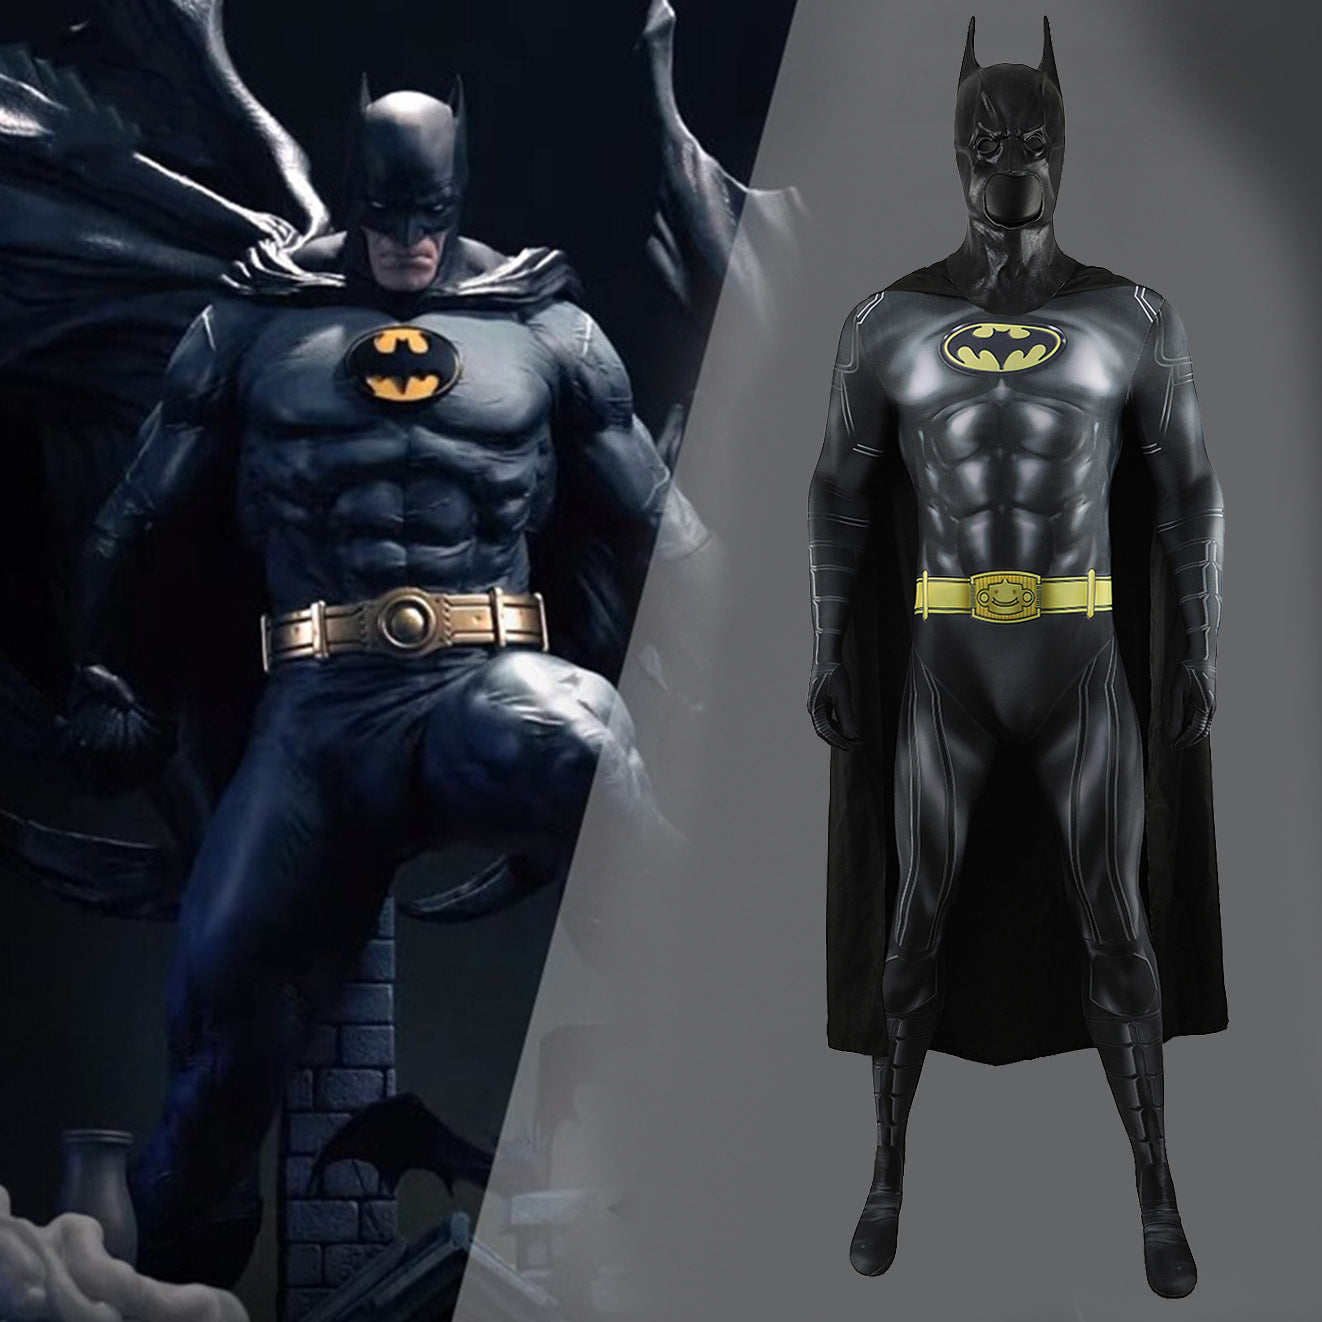 The Flash Batman Michael Keaton Jumpsuits Costume Kids Adult Halloween Bodysuit - coscrew